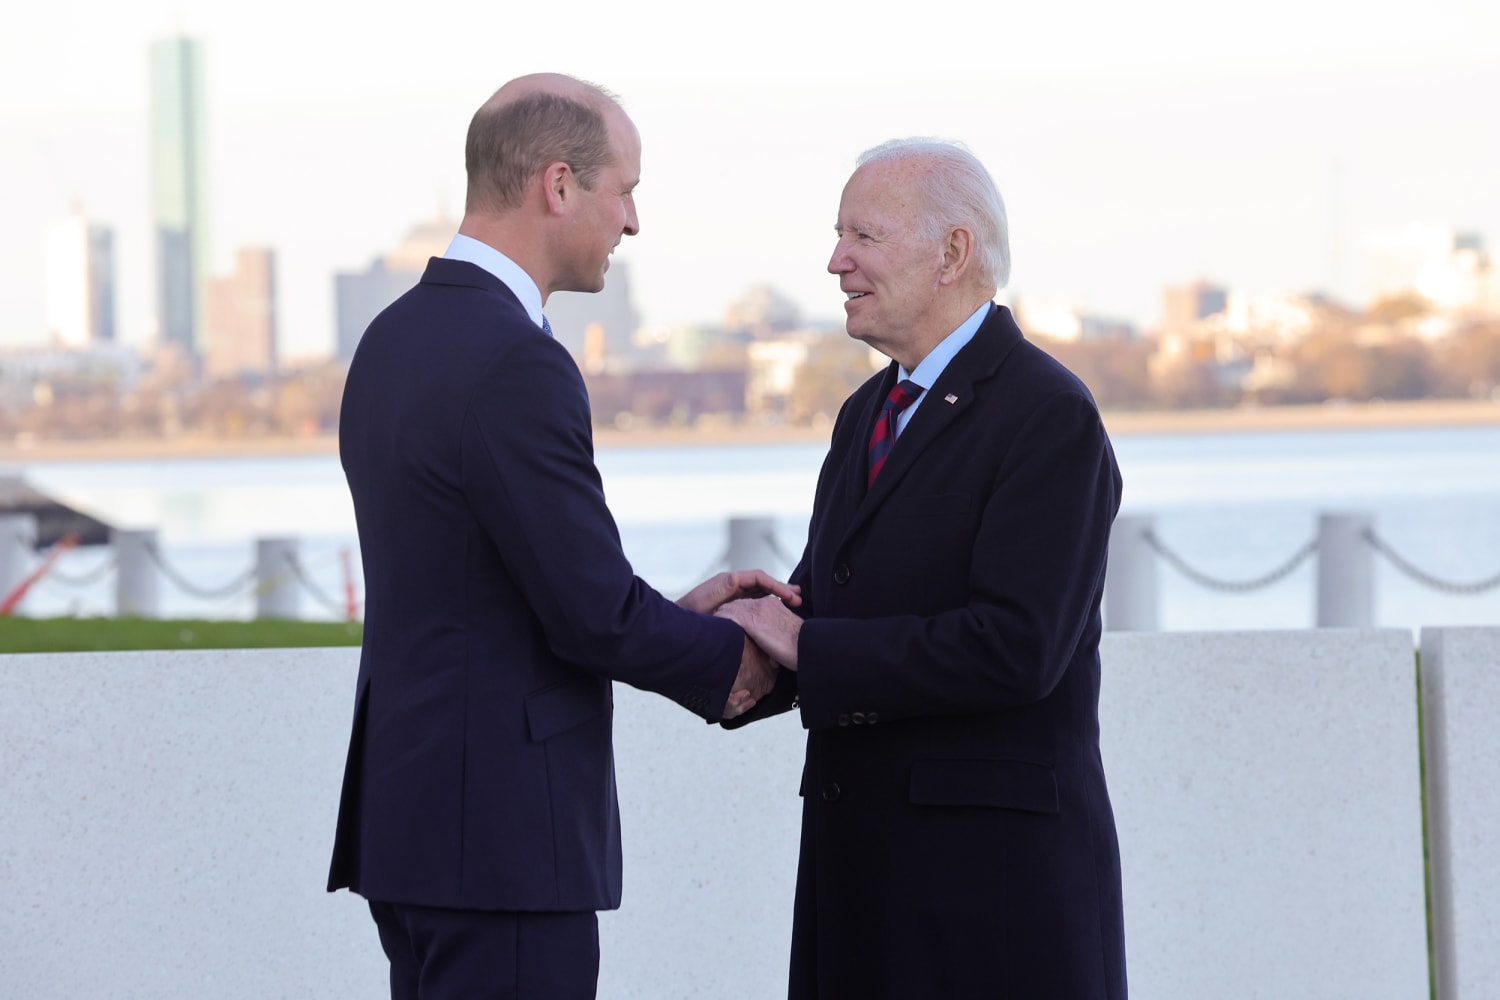 Prince William meets with President Joe Biden during Boston trip